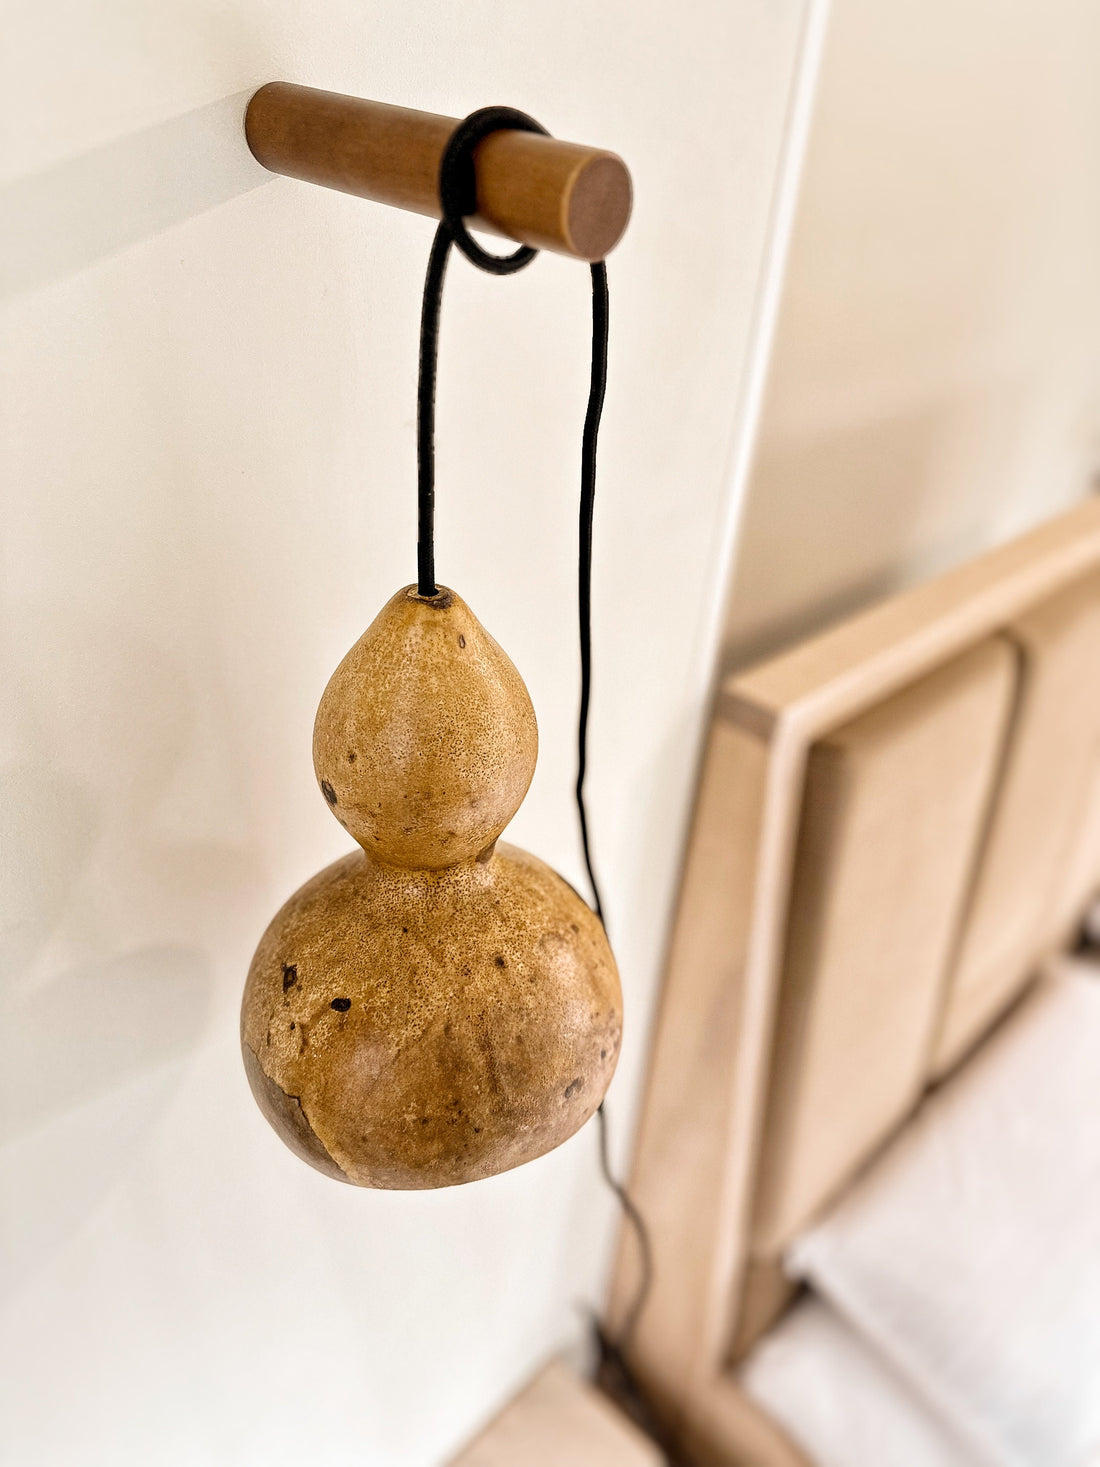 Plug in wall of wooden sconces, handmade marrocan pendant light, led light, set of wall light sconce, rattan pendant light, lampshade